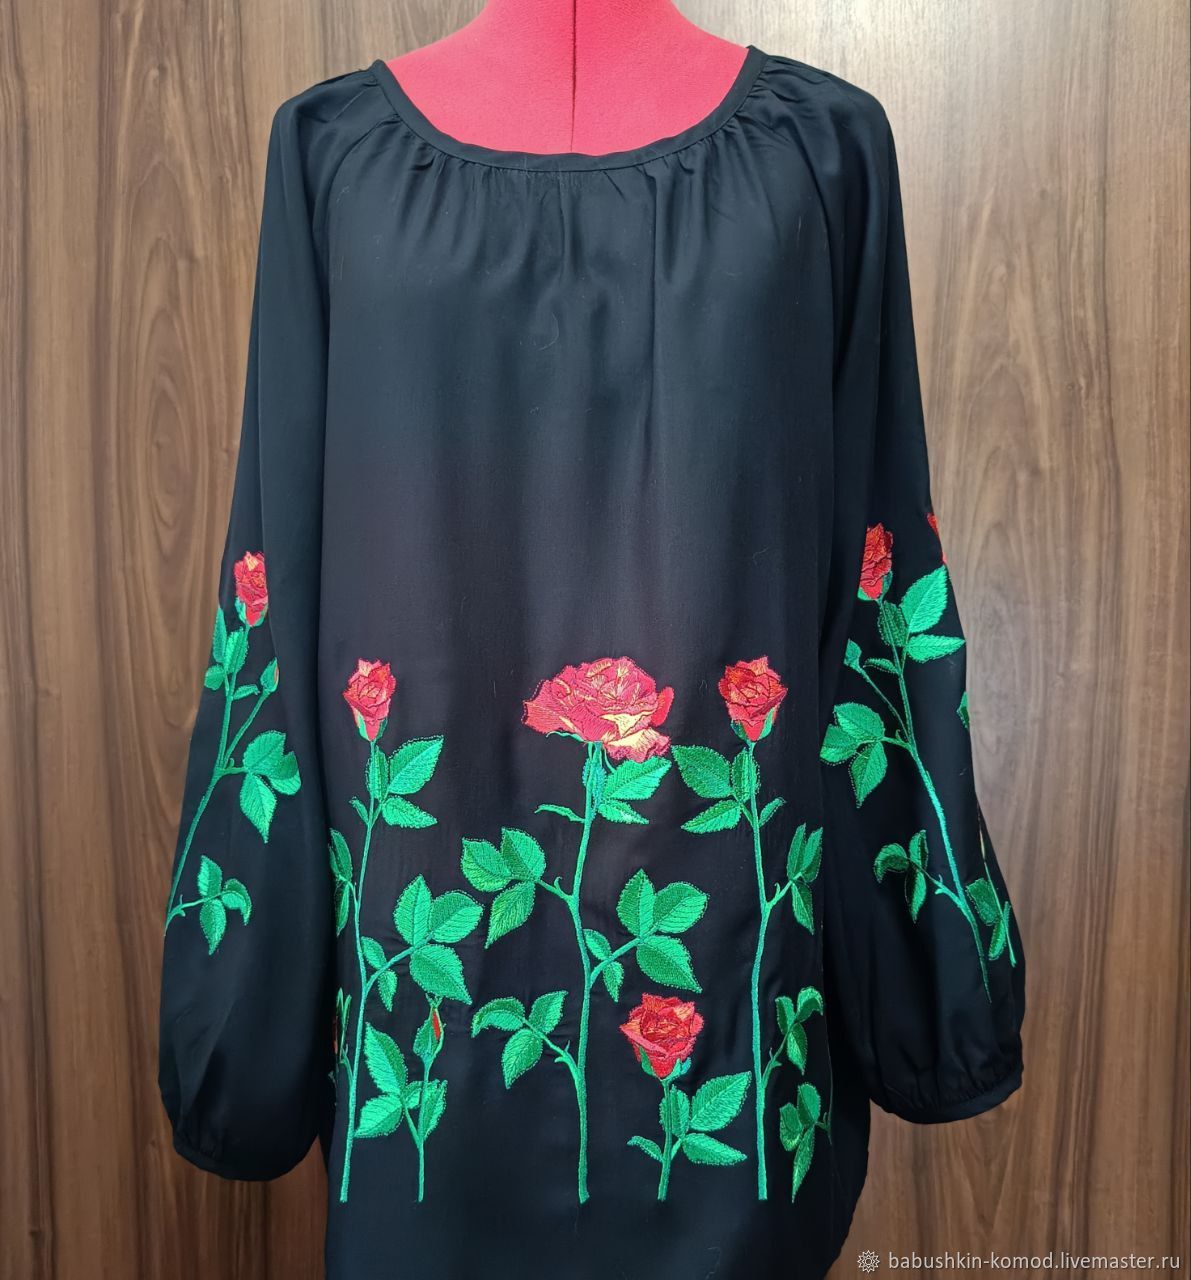 Women's embroidered blouse 'Sympathy' LR4-296, Blouses, Temryuk,  Фото №1